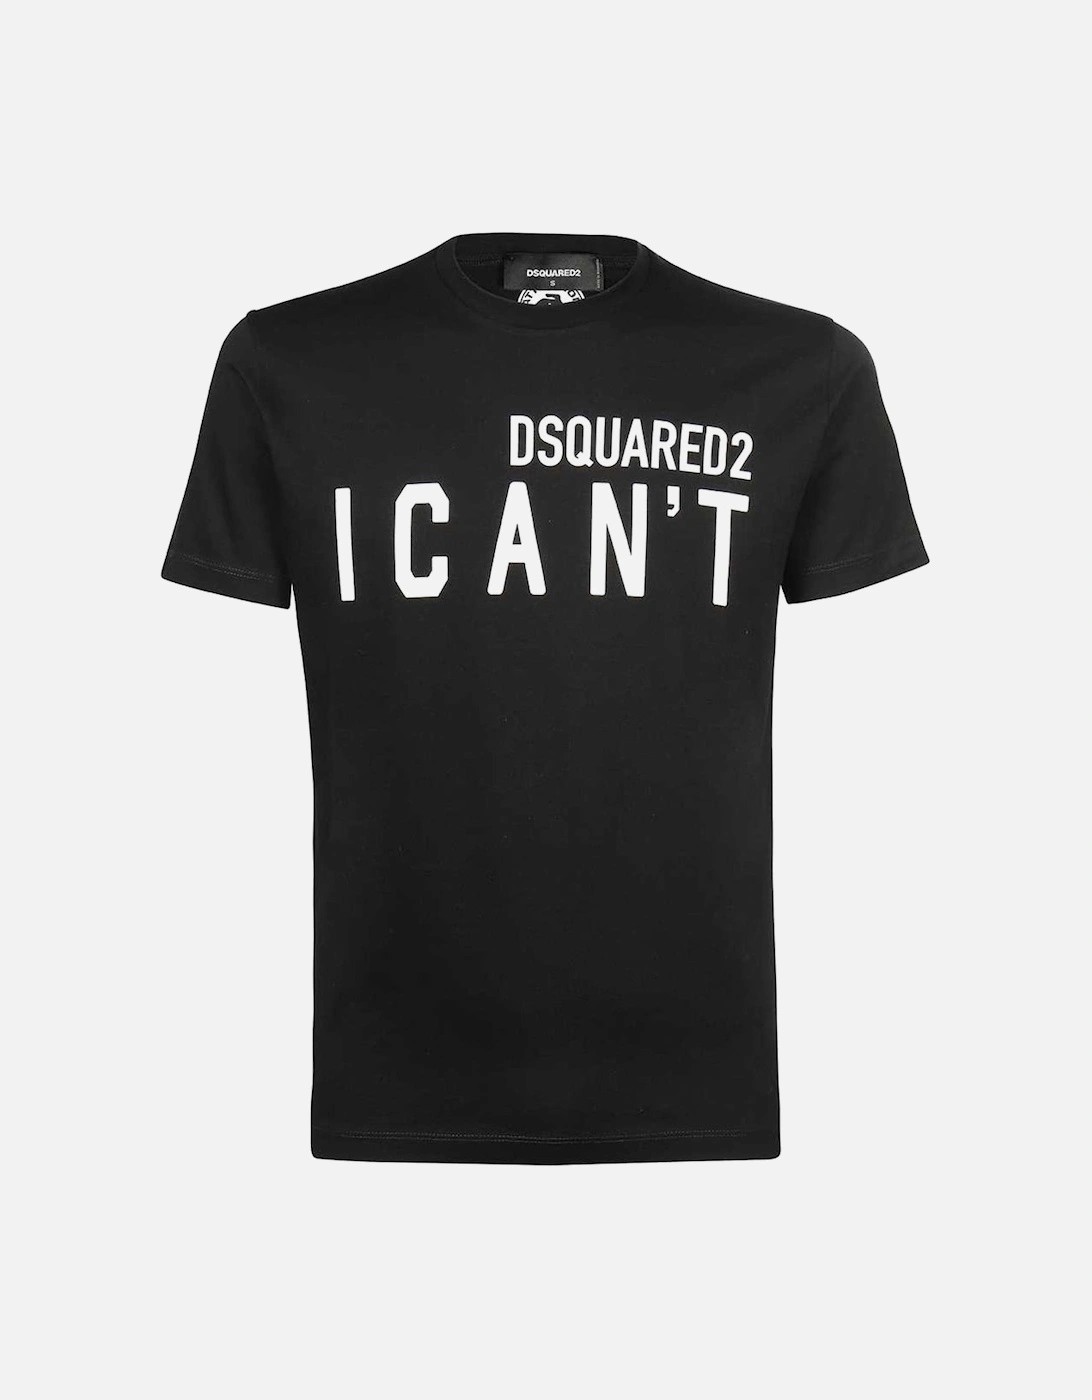 Men's "I CAN'T" Logo T-Shirt Black, 2 of 1